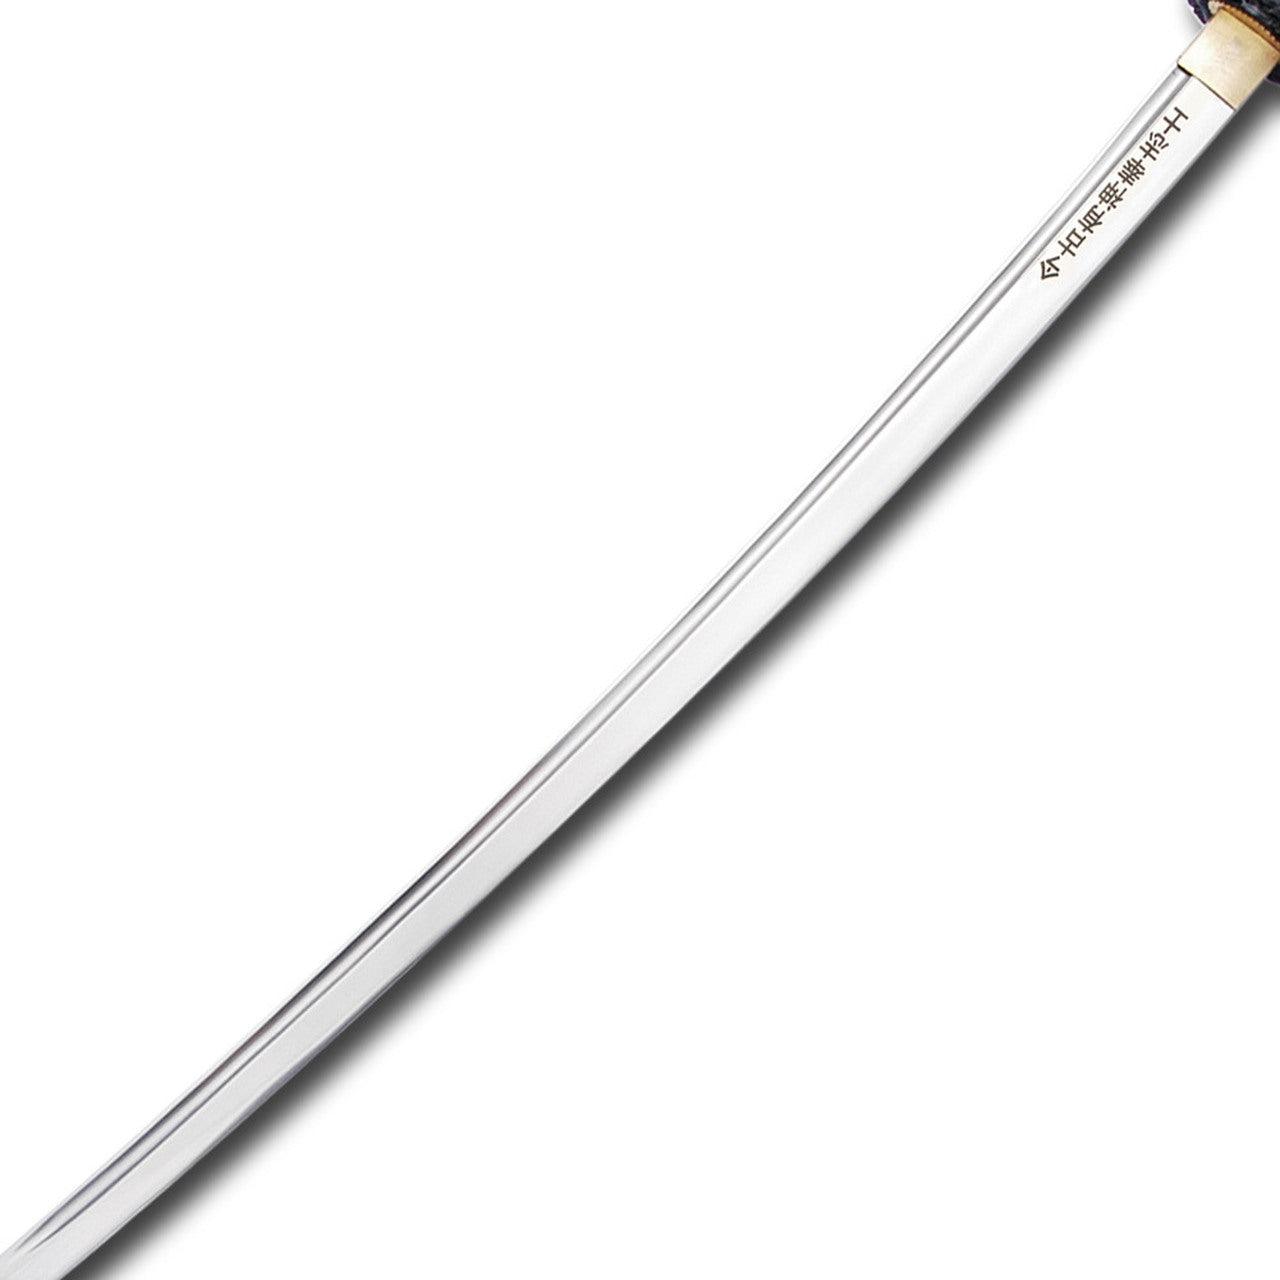 Last Samurai Sword 1045 Carbon Steel Blade-2